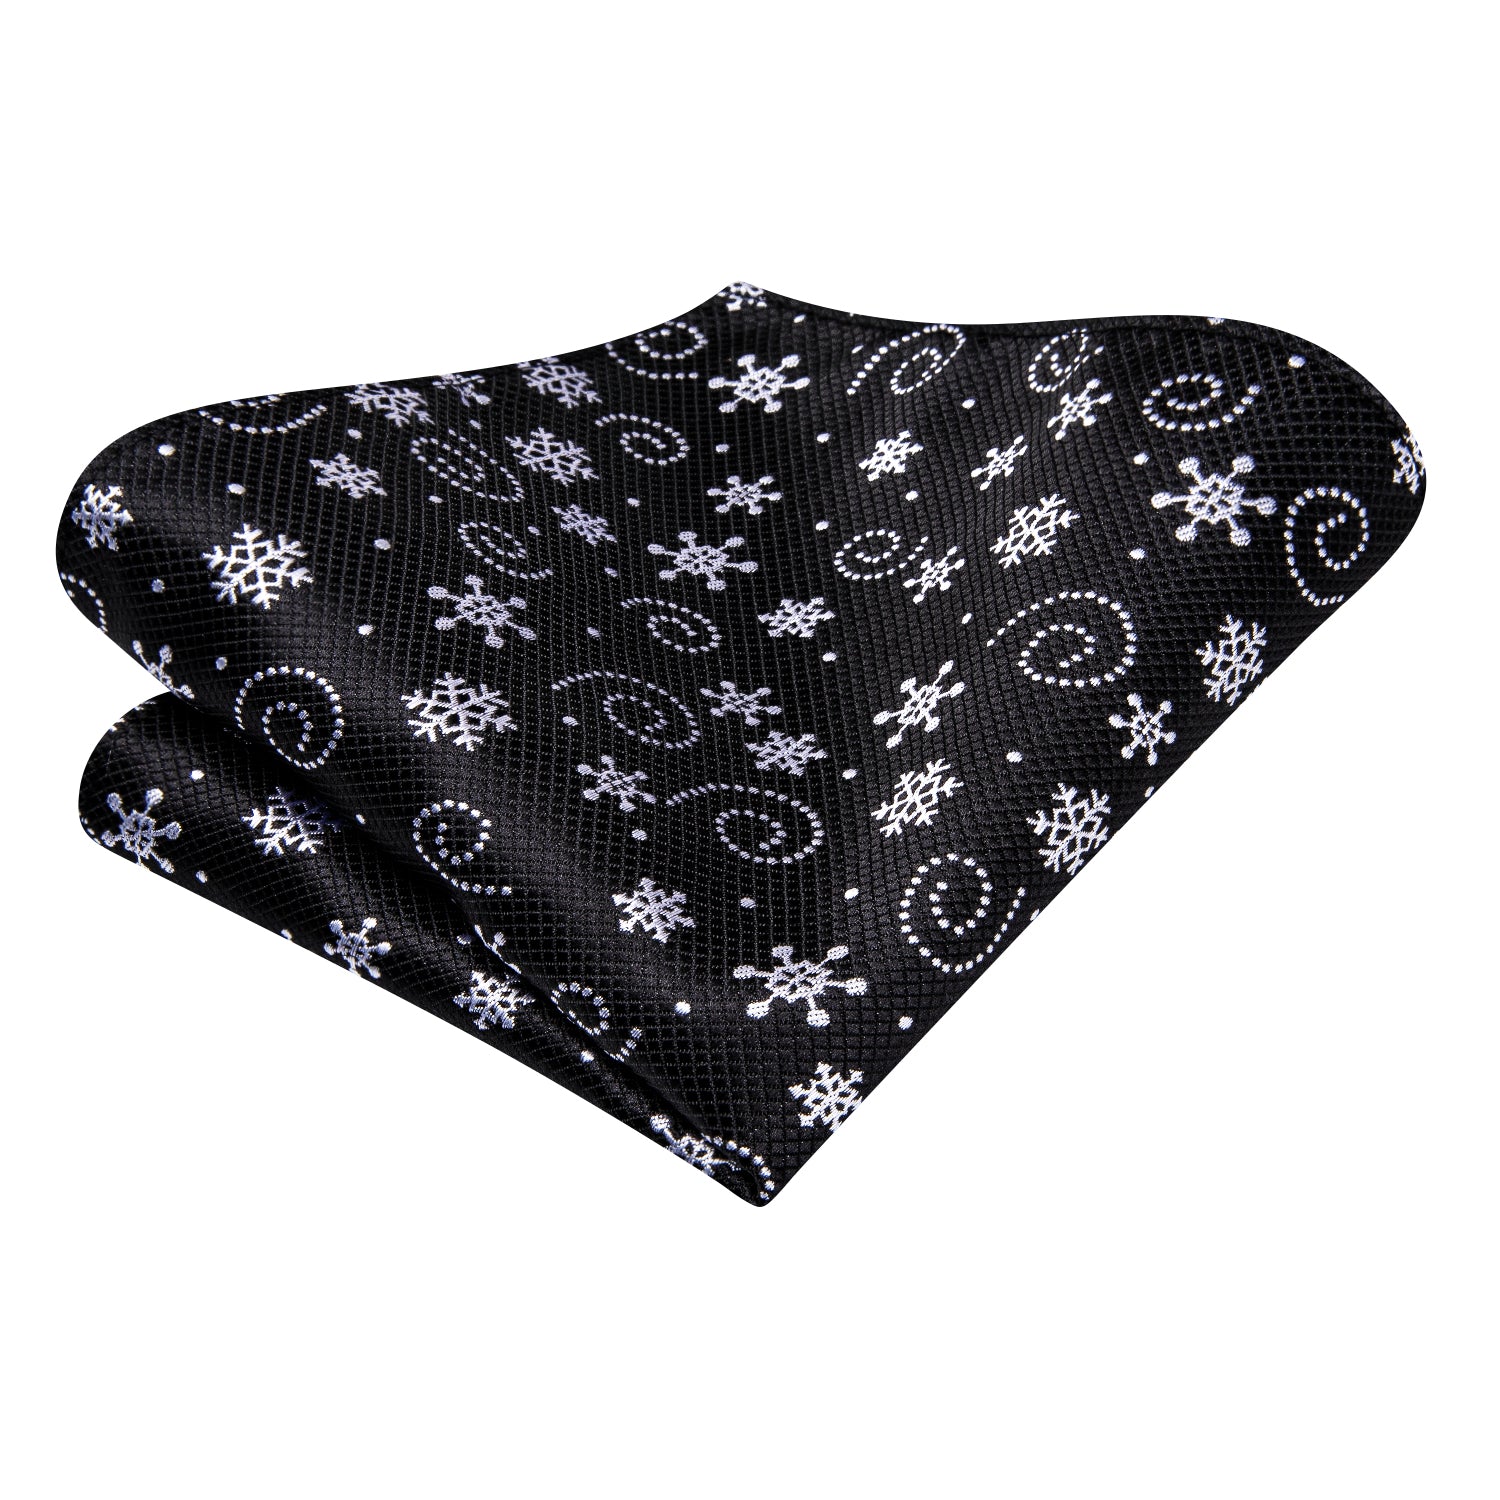 Black White Christmas Snowflake Self-tied Bow Tie Hanky Cufflinks Set